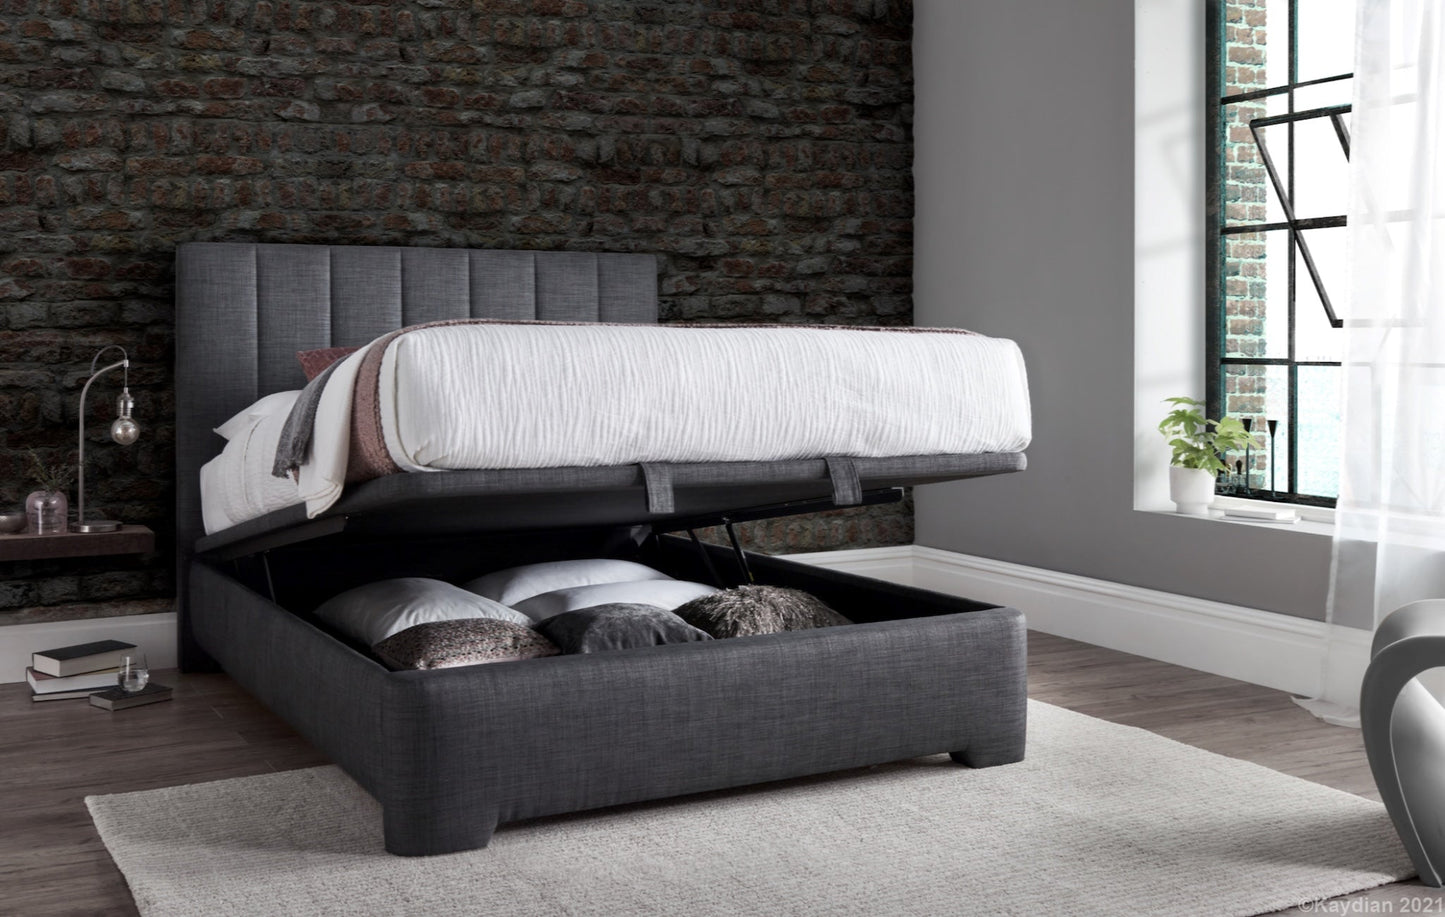 Medburn Ottoman Storage Bed frame - Marbella Grey - TV Beds NorthwestMEDFL135MDG